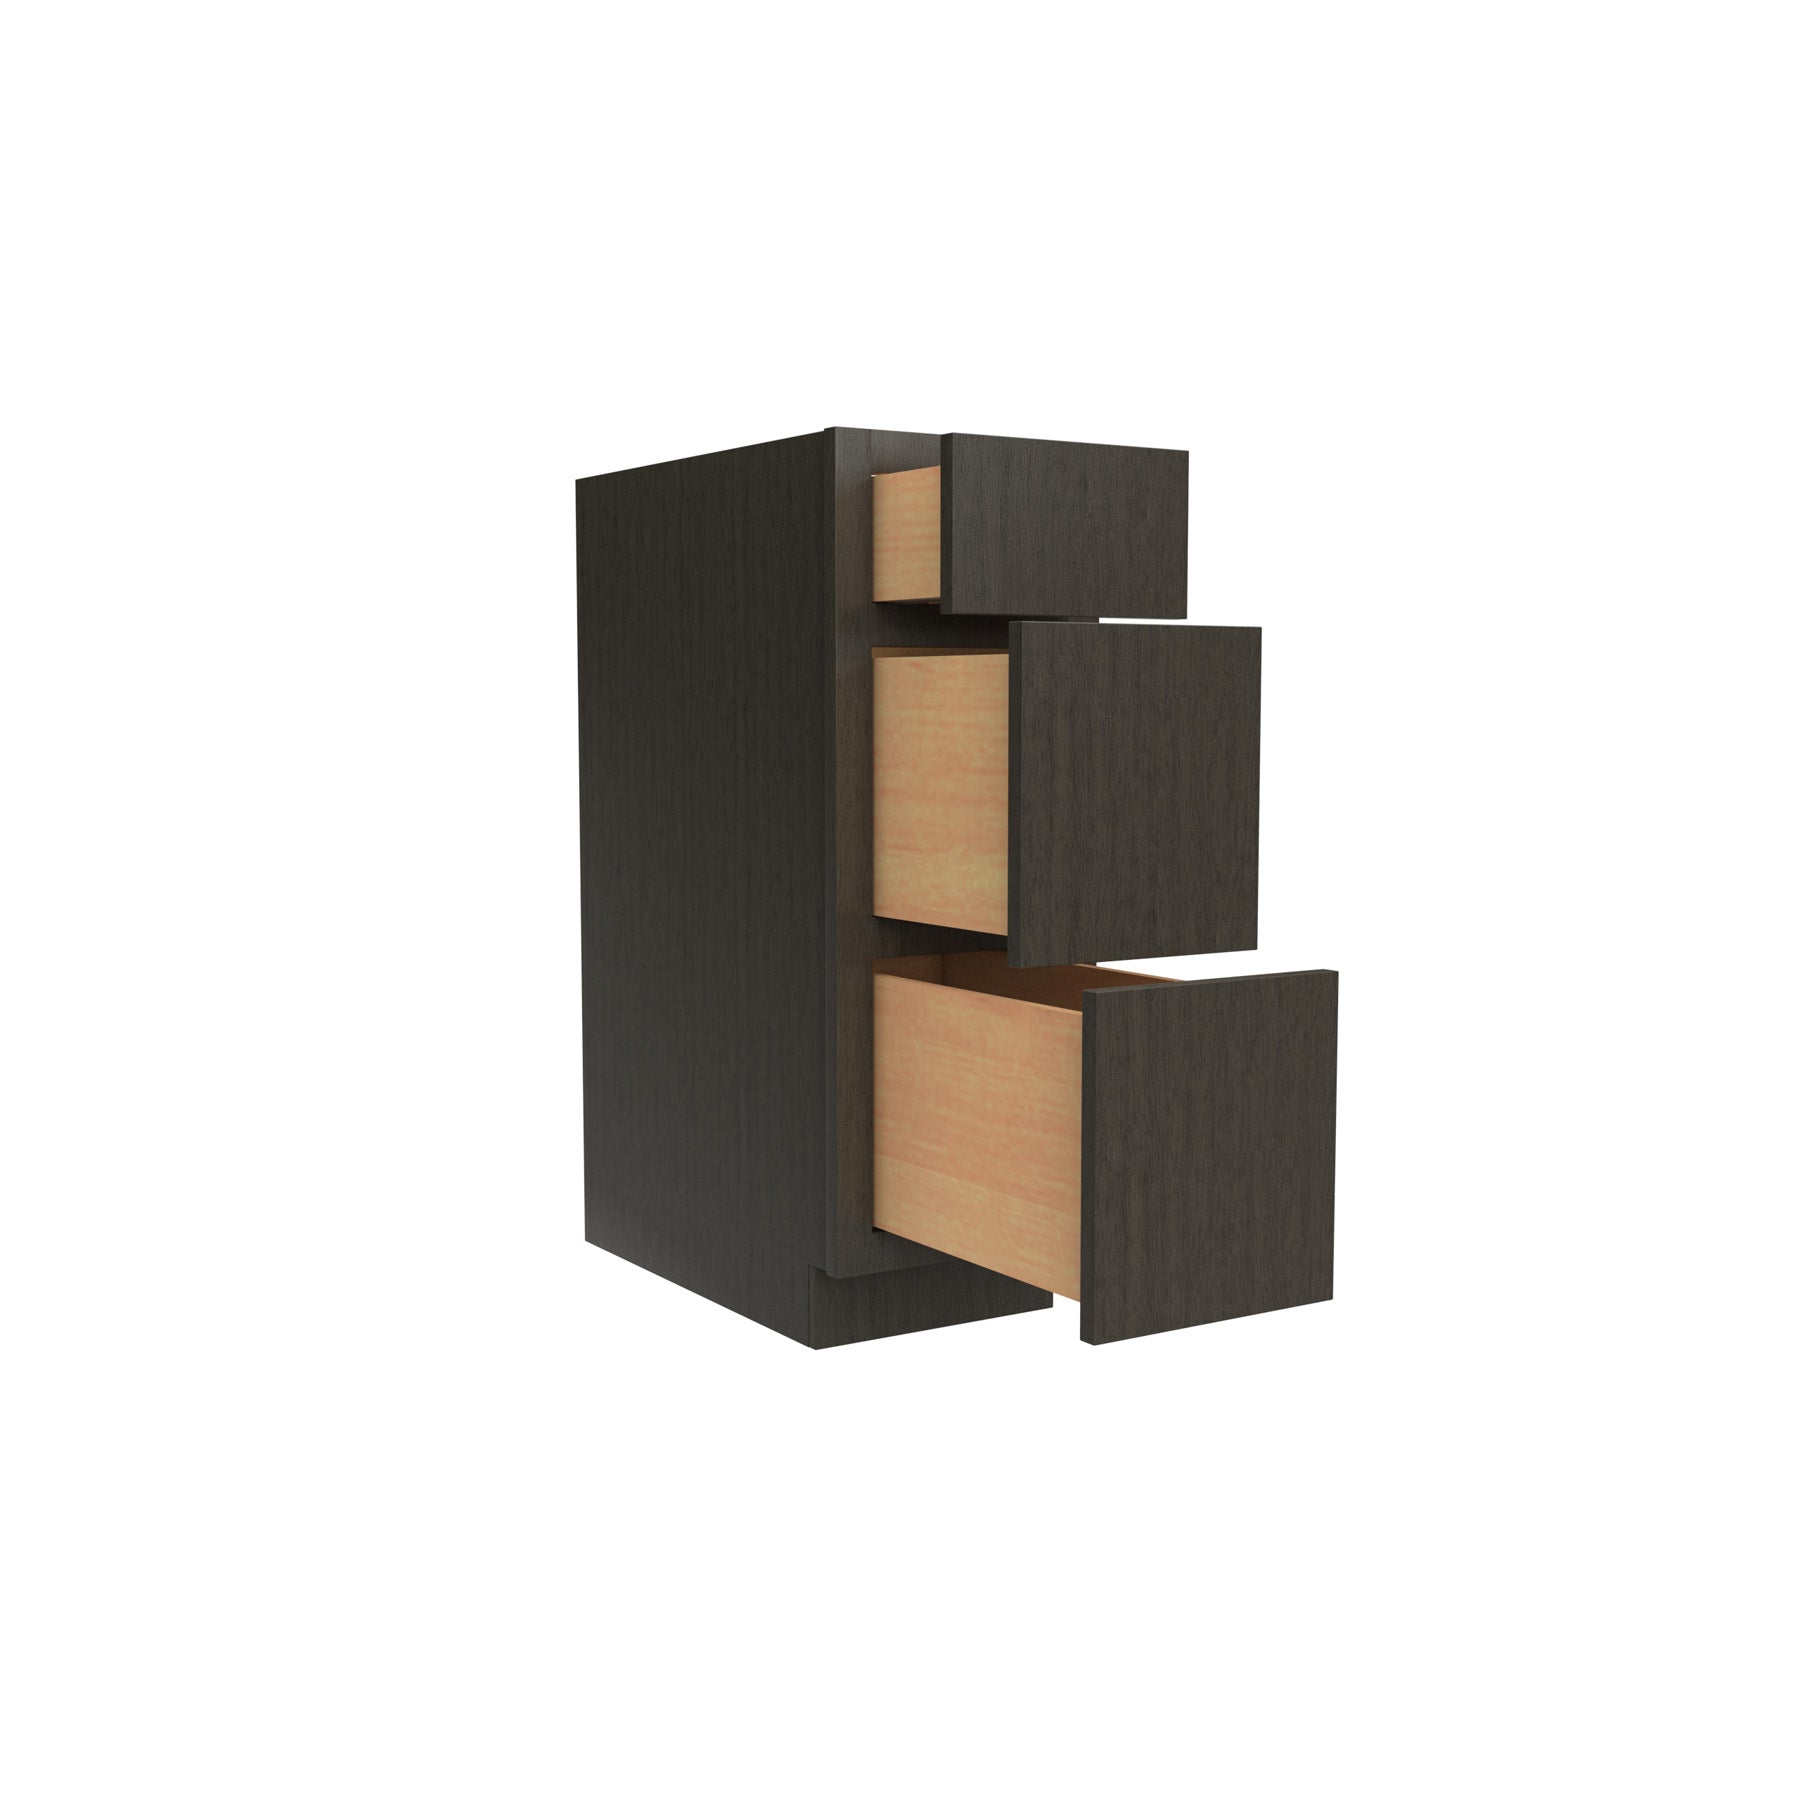 Luxor Smoky Grey - 3 Drawer Base Cabinet | 12"W x 34.5"H x 24"D